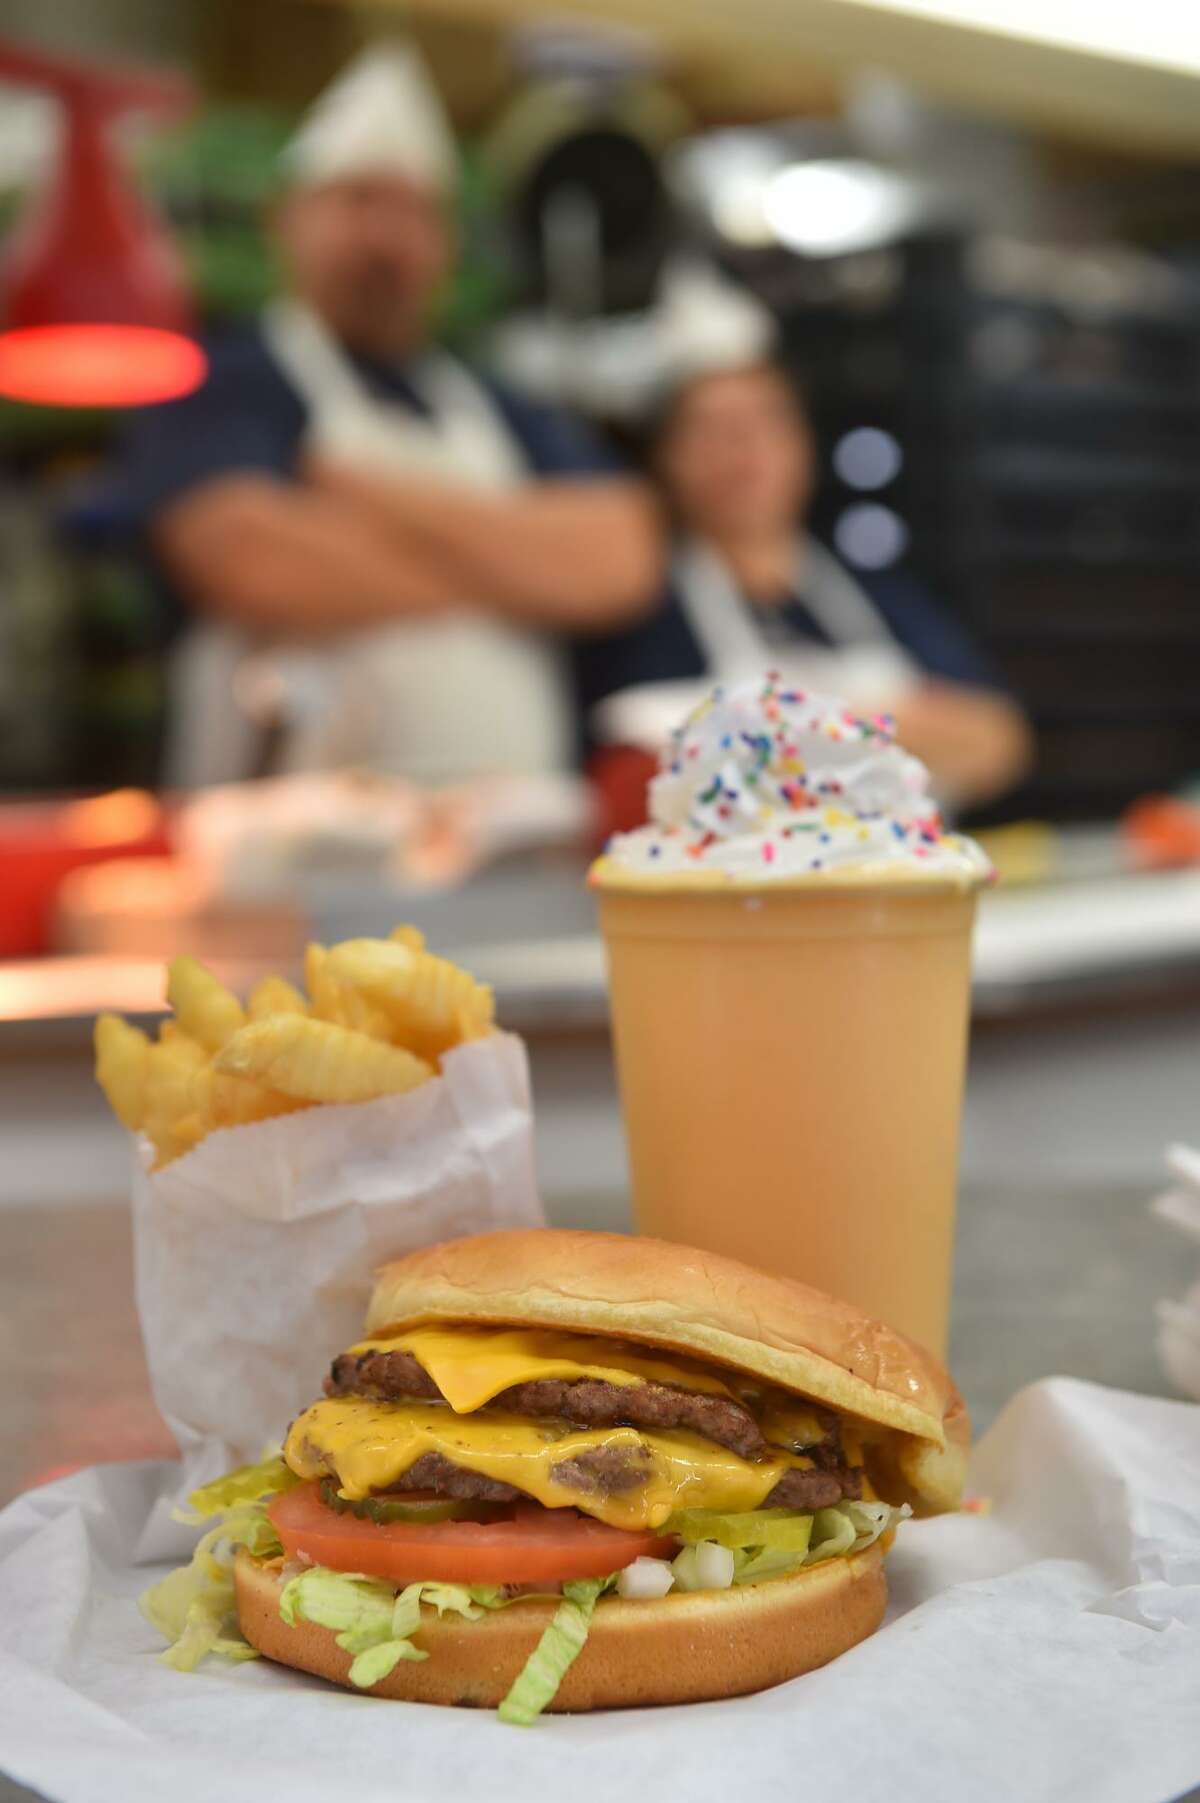 Burger, fries and a shake from Burger Boy.